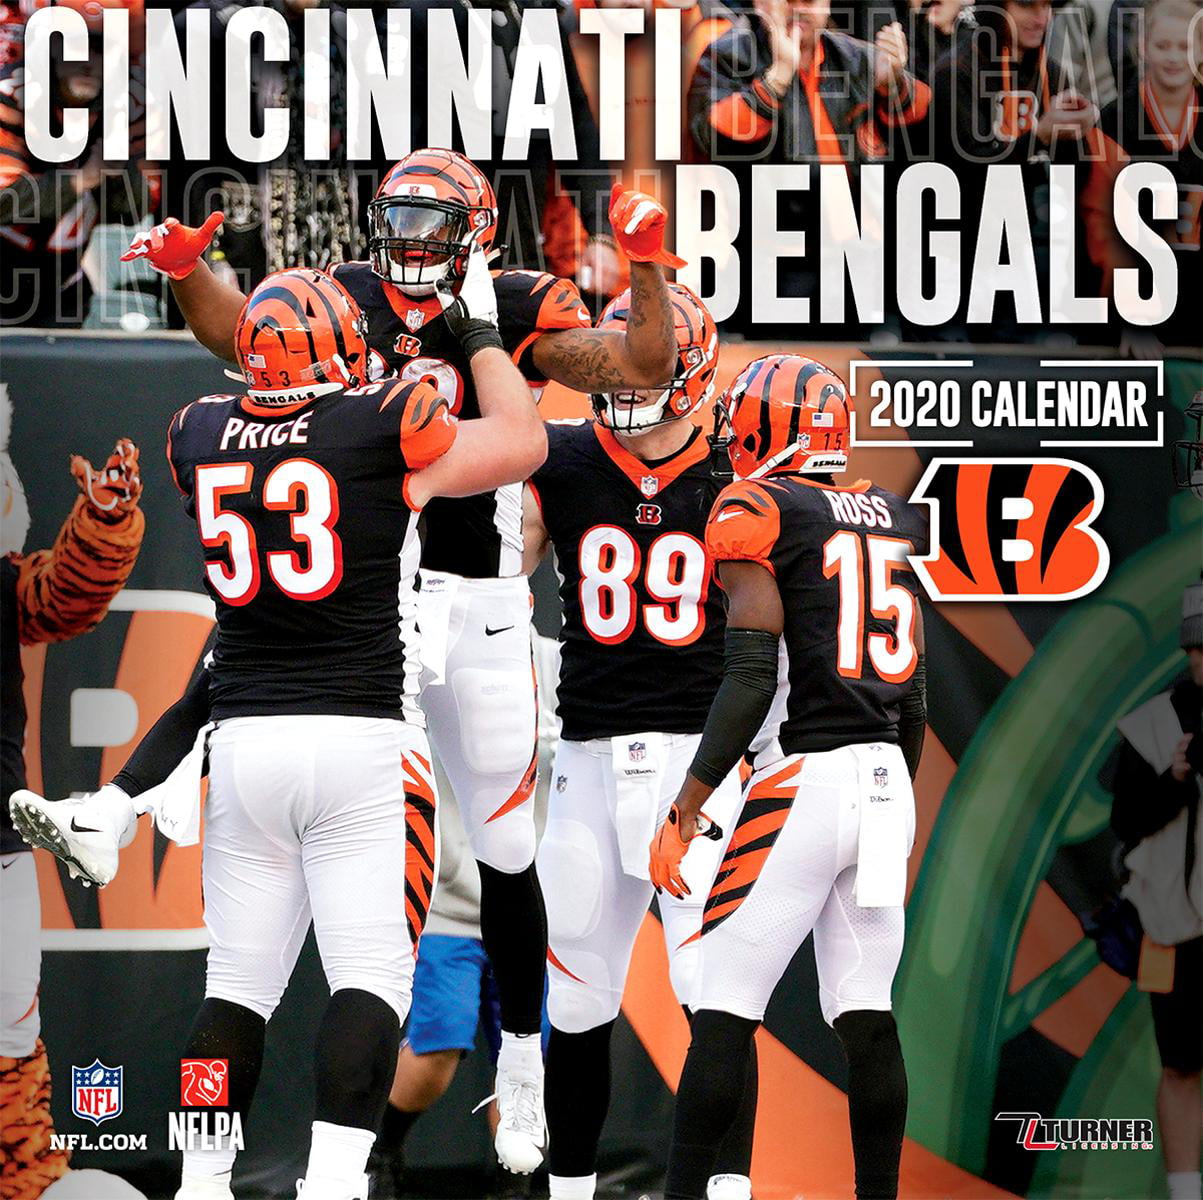 Cincinnati Bengals: 2020 12x12 Team Wall Calendar (Other) - Walmart.com